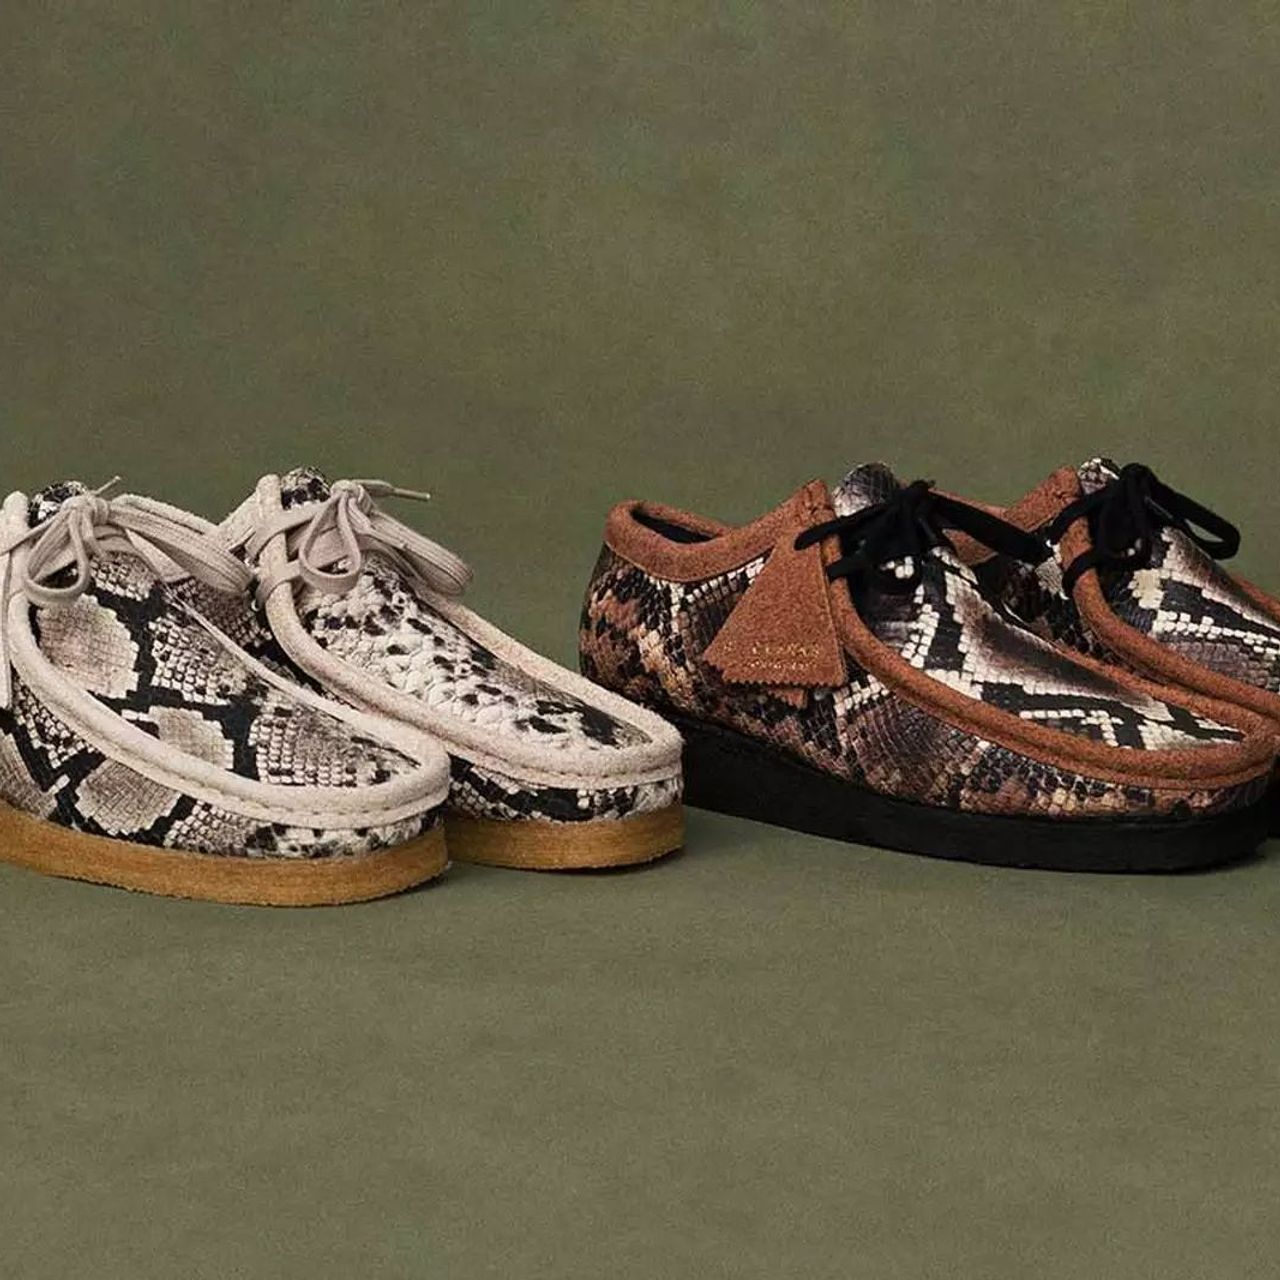 A Brief History of Aimé Leon Dore Collaborations - Sneaker Freaker